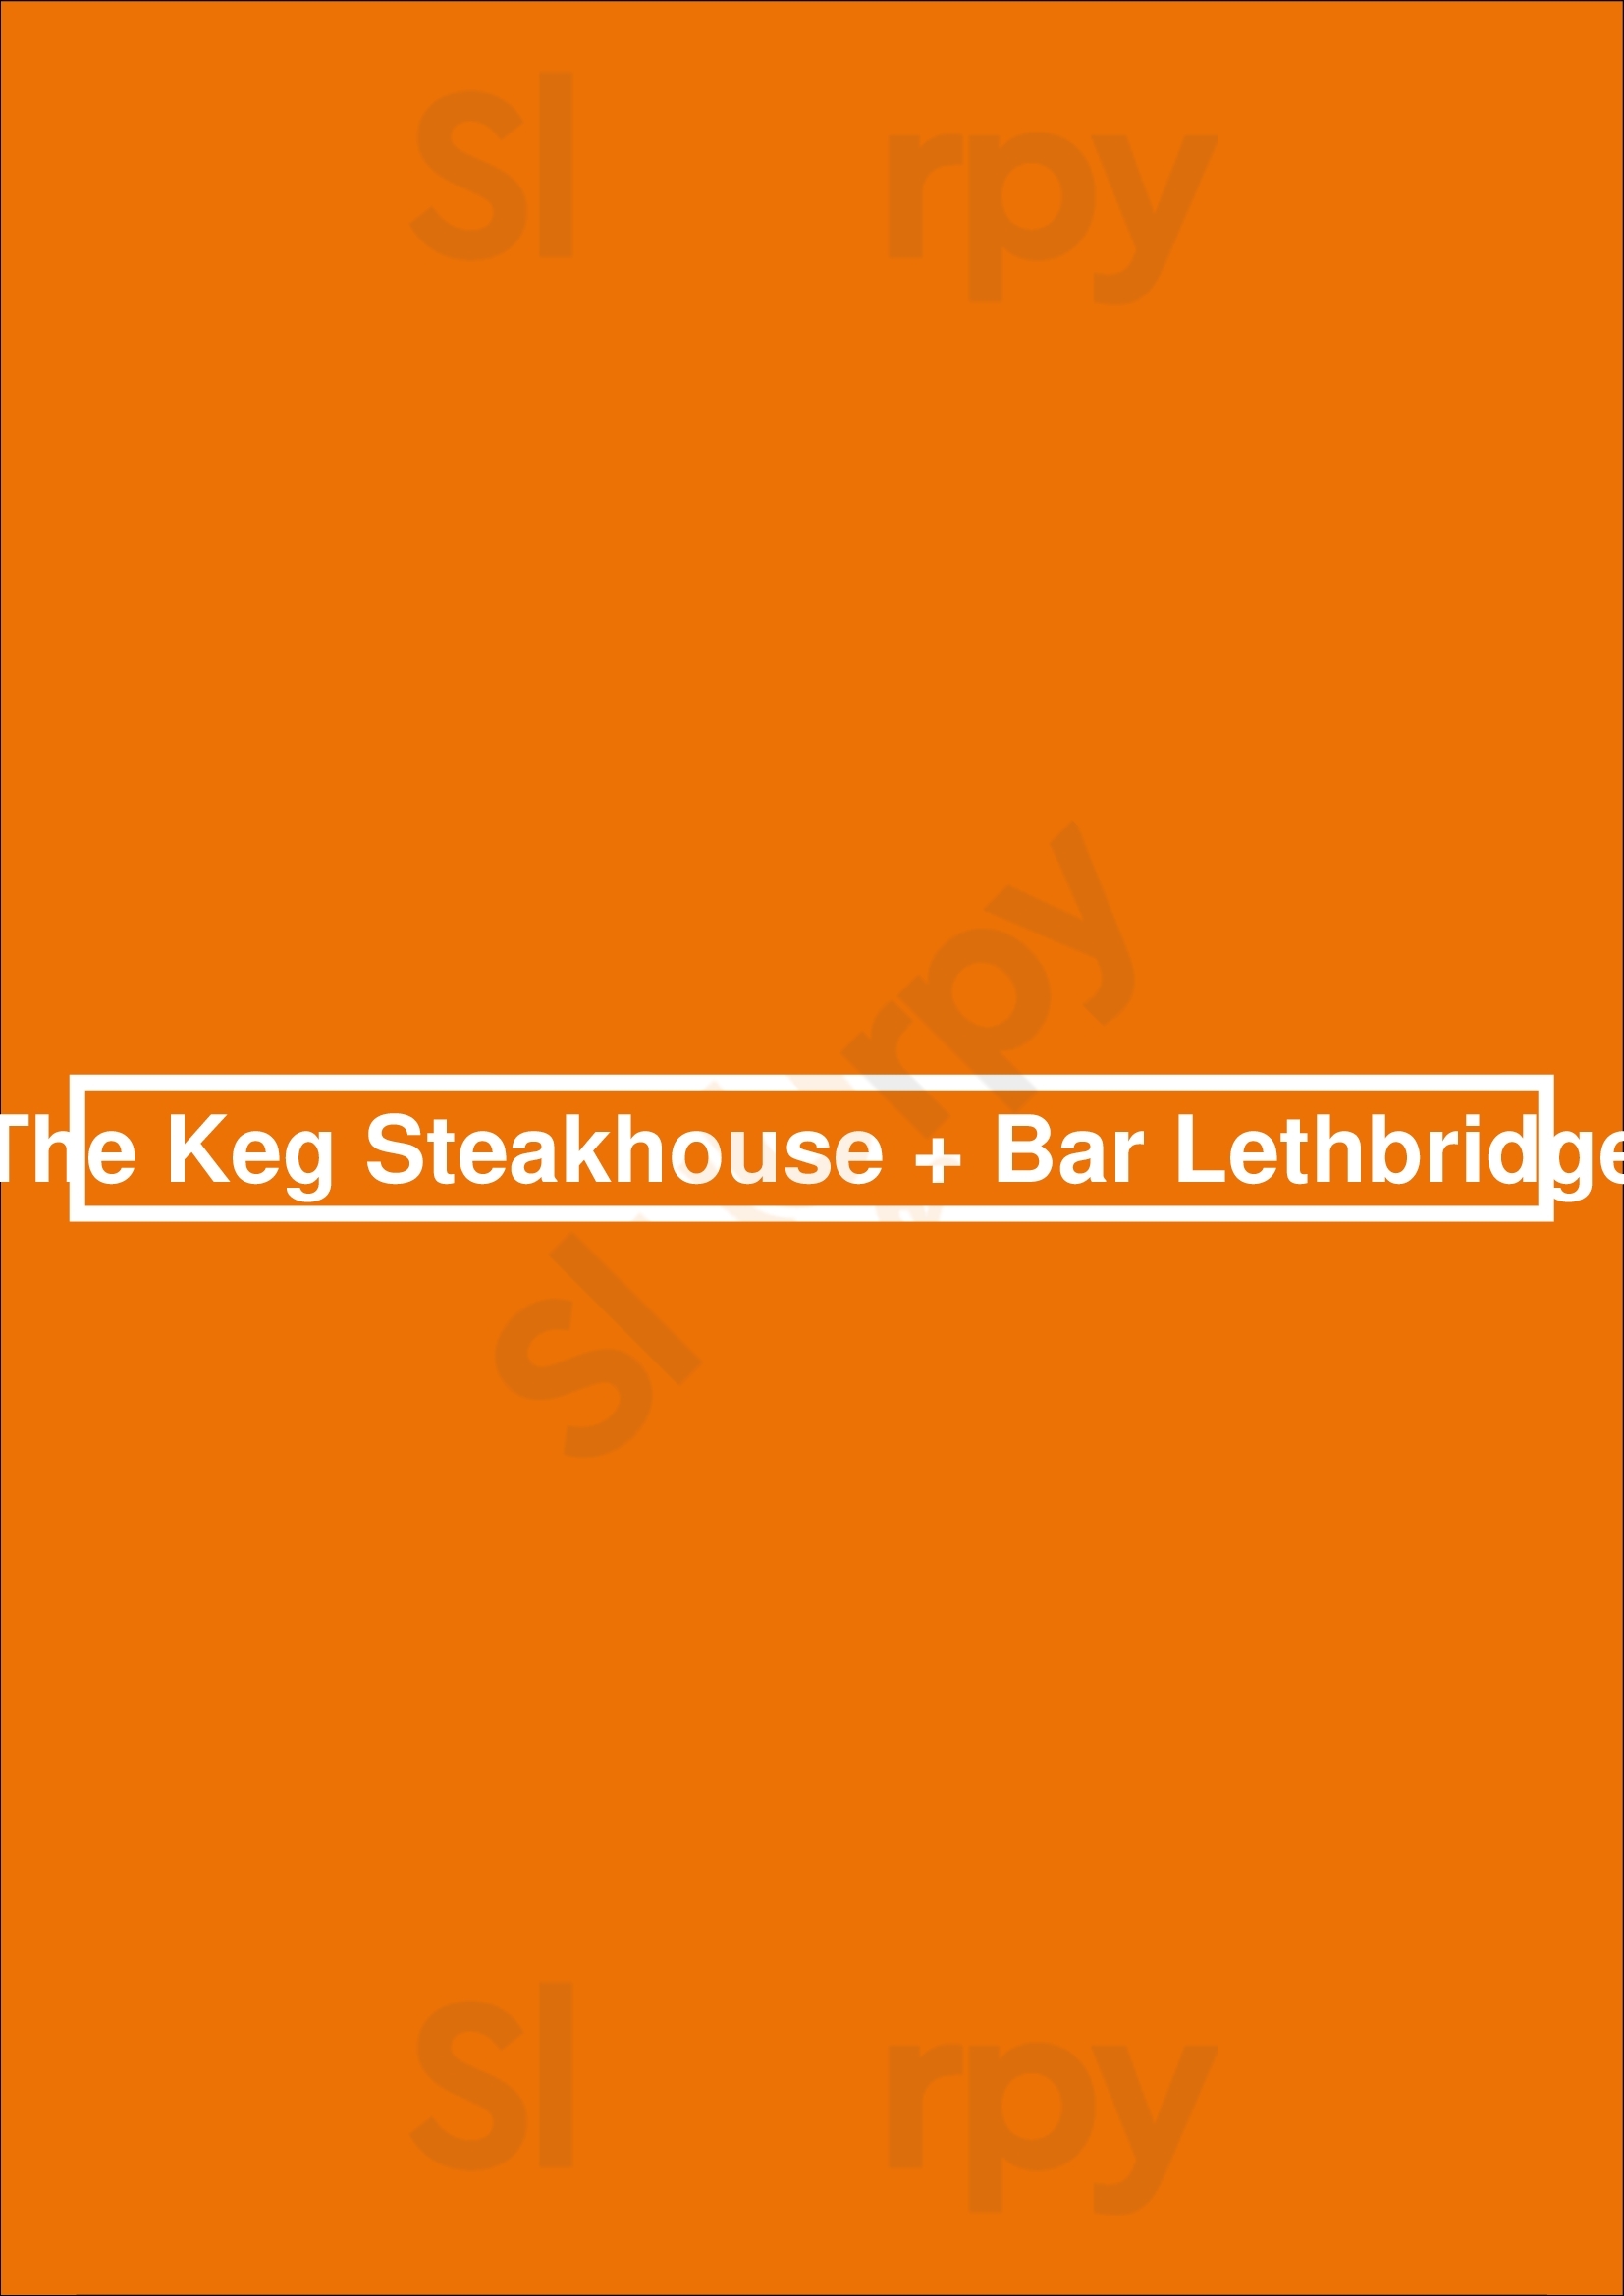 The Keg Steakhouse + Bar - Lethbridge Lethbridge Menu - 1